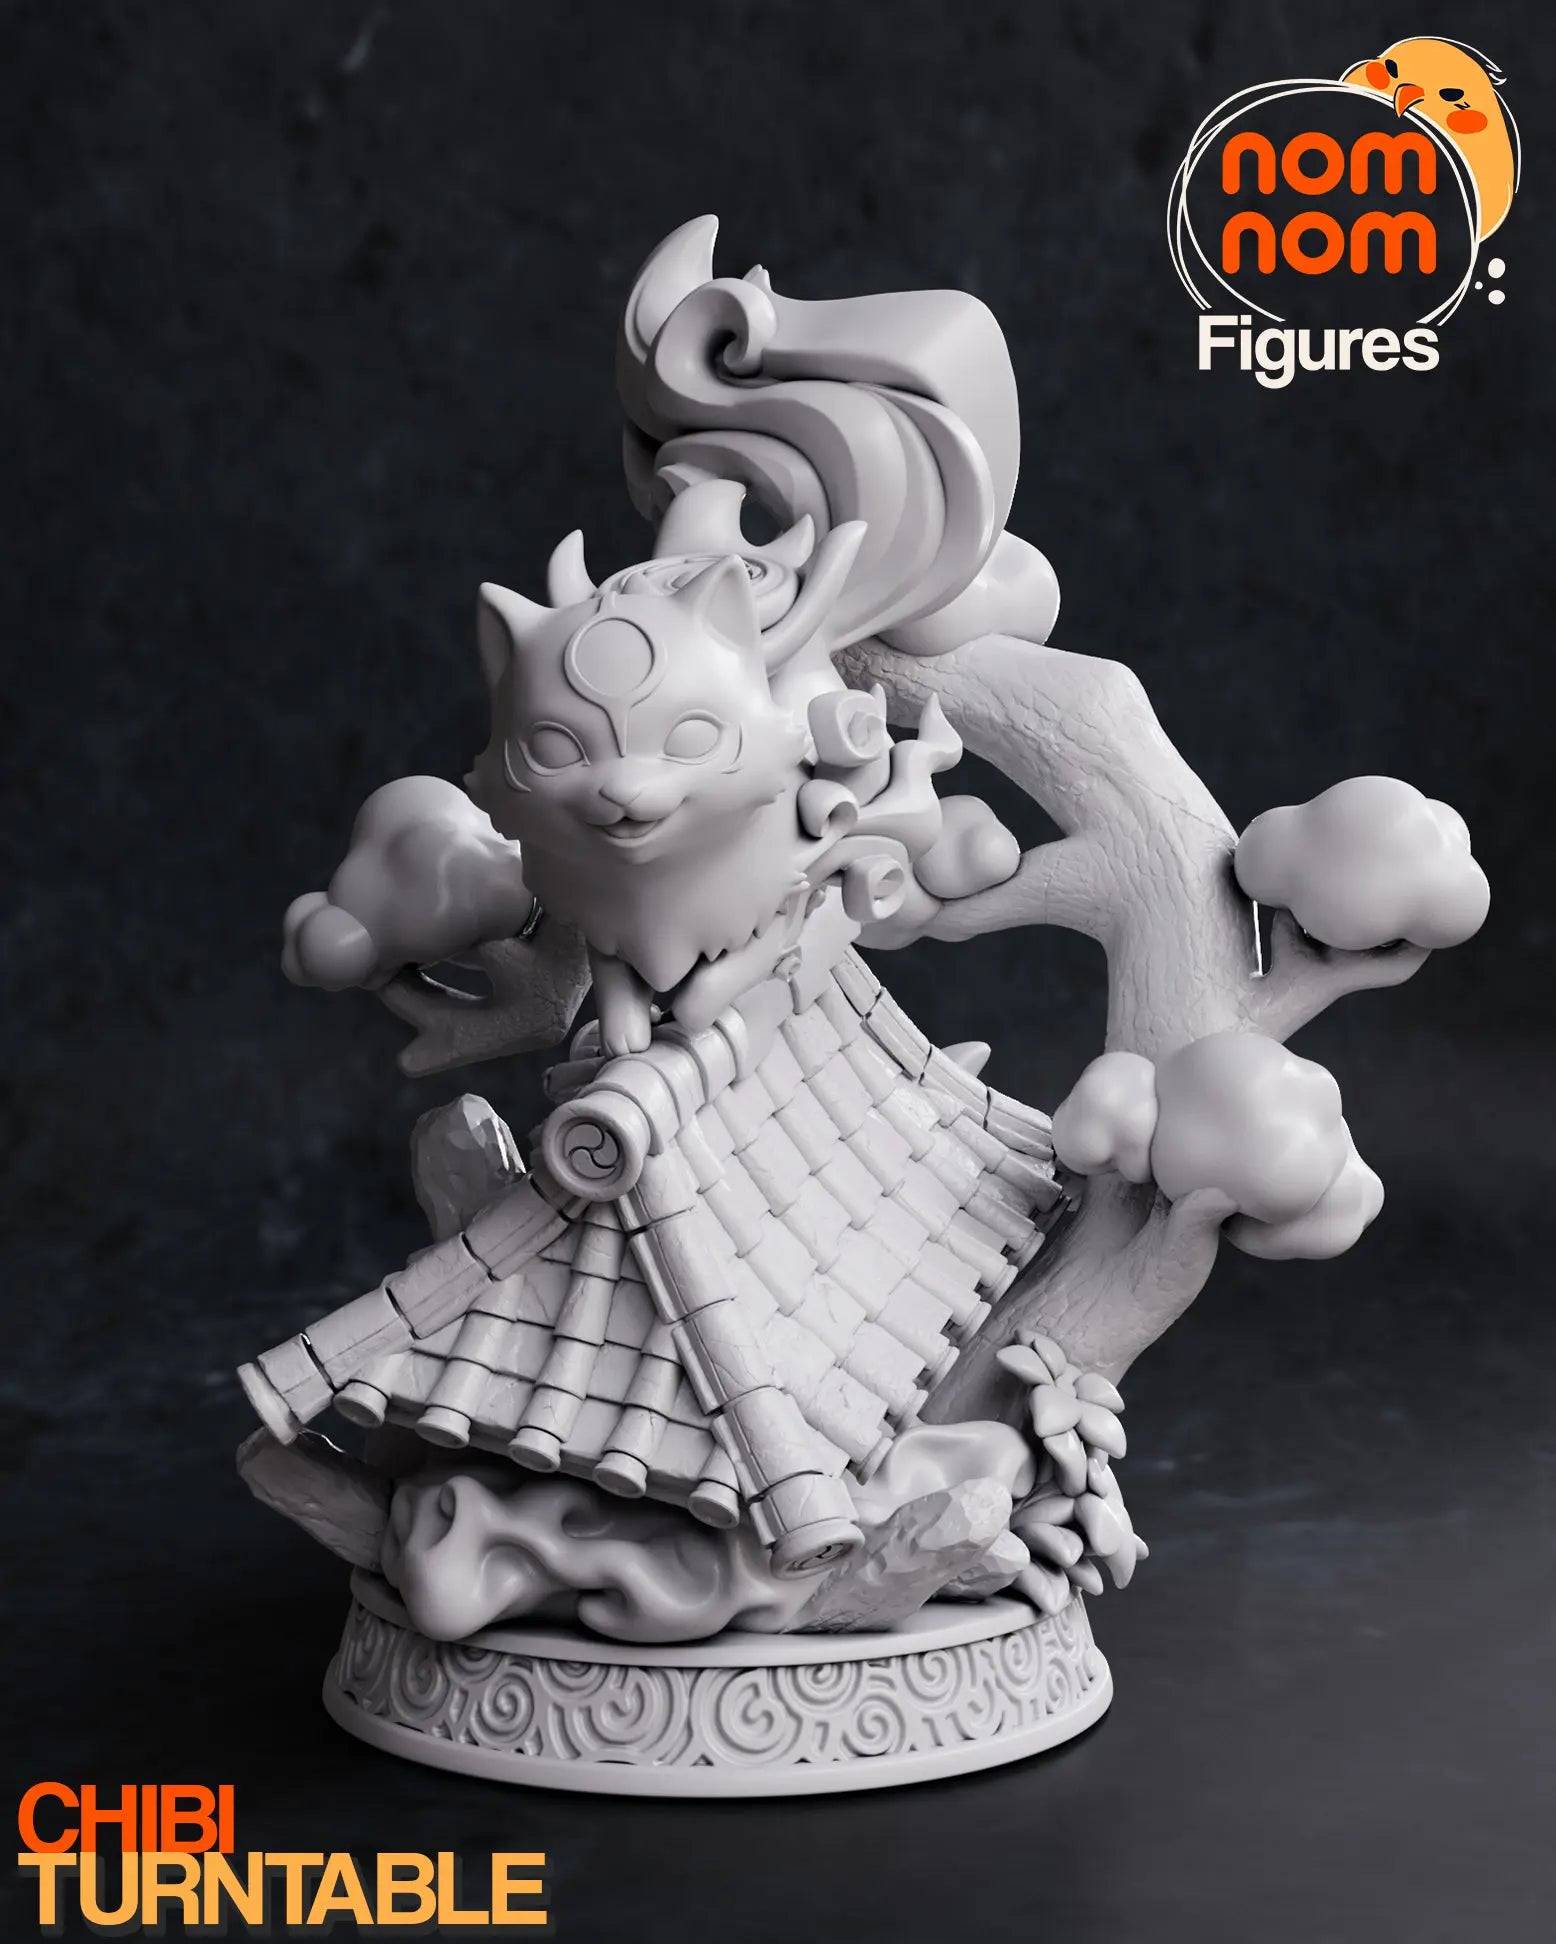 Chibi Adorable Sun Goddess Pupper | Resin Garage Kit Sculpture Anime Video Game Fan Art Statue | Nomnom Figures - Tattles Told 3D